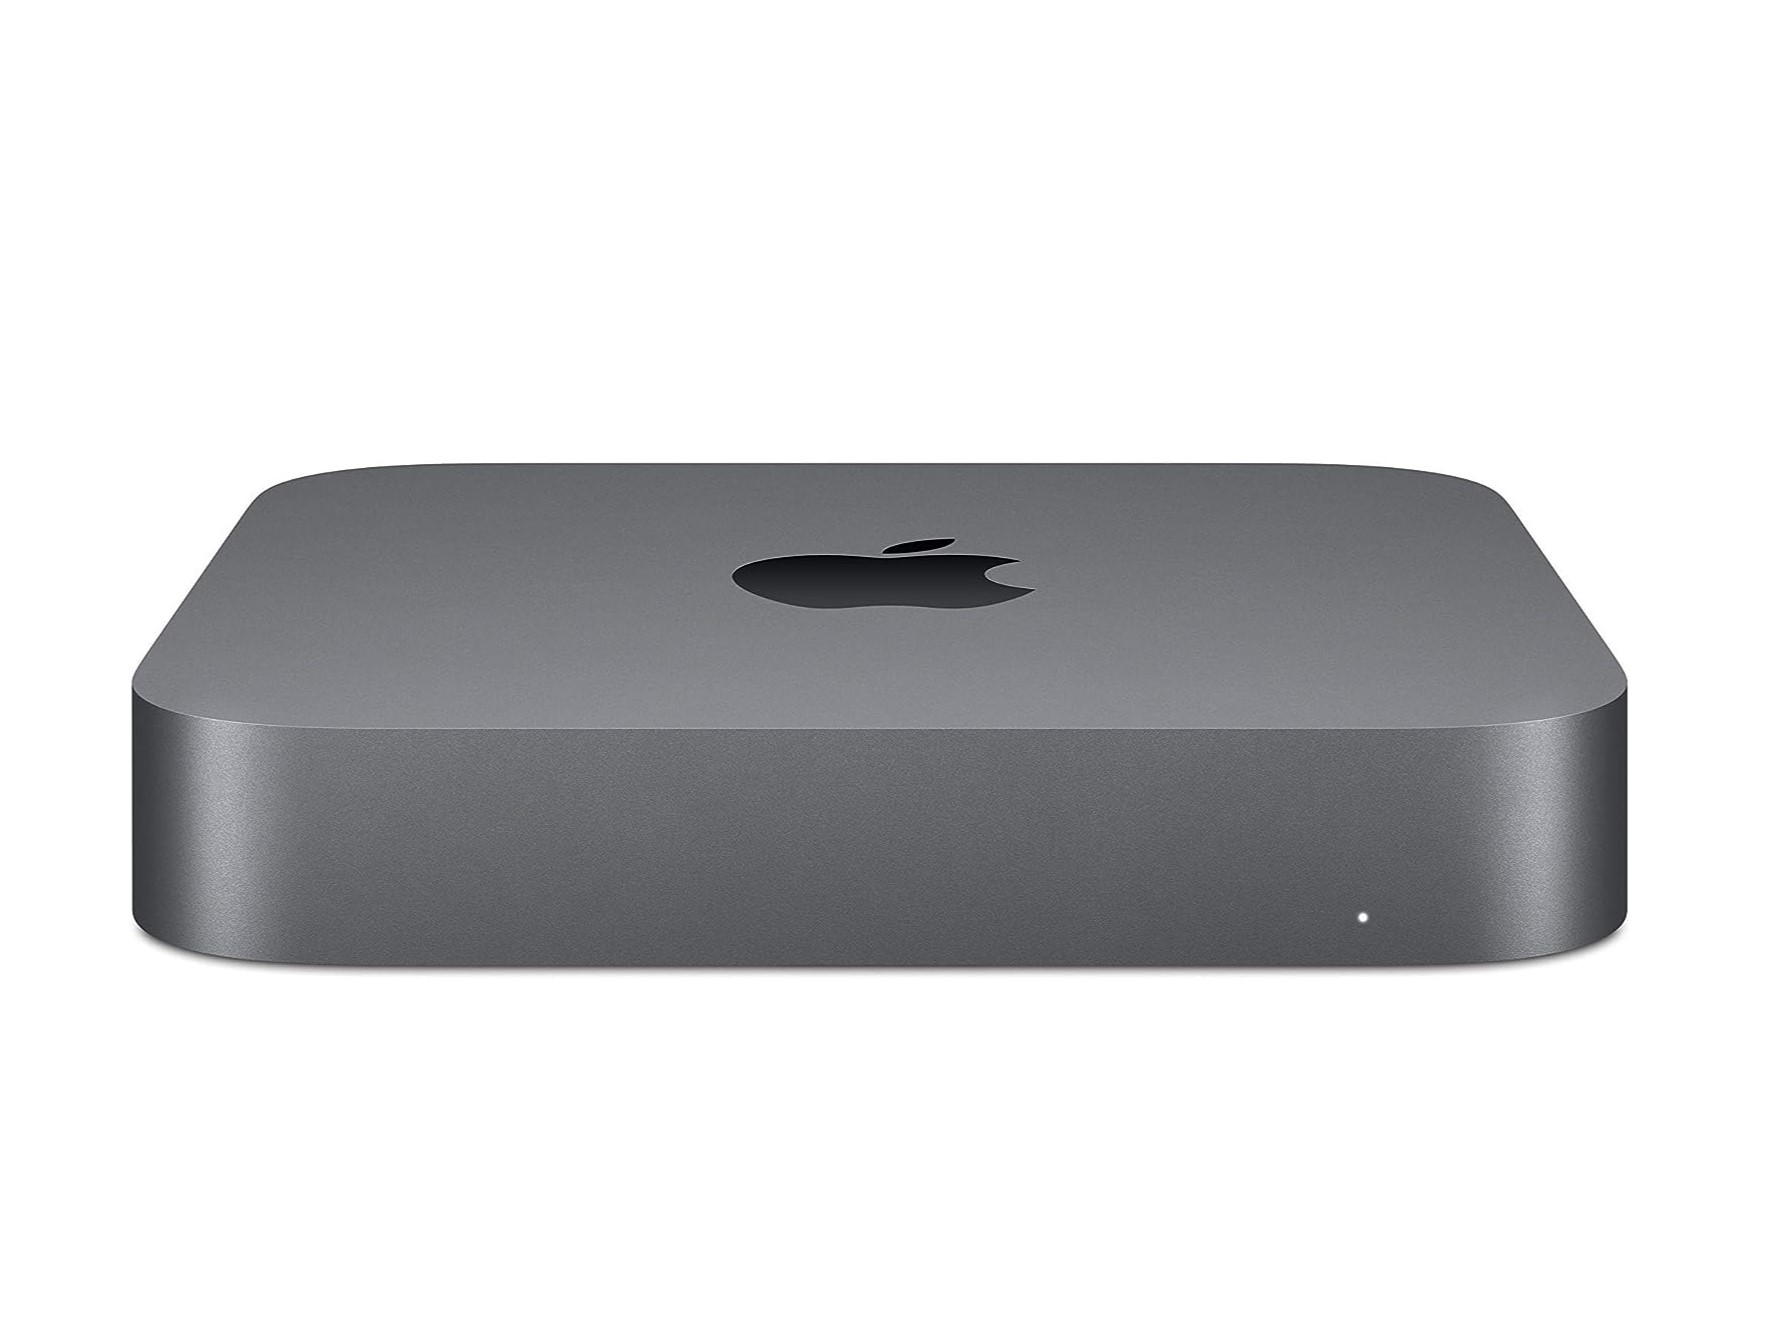 2018 Apple Mac Mini in gray product image.